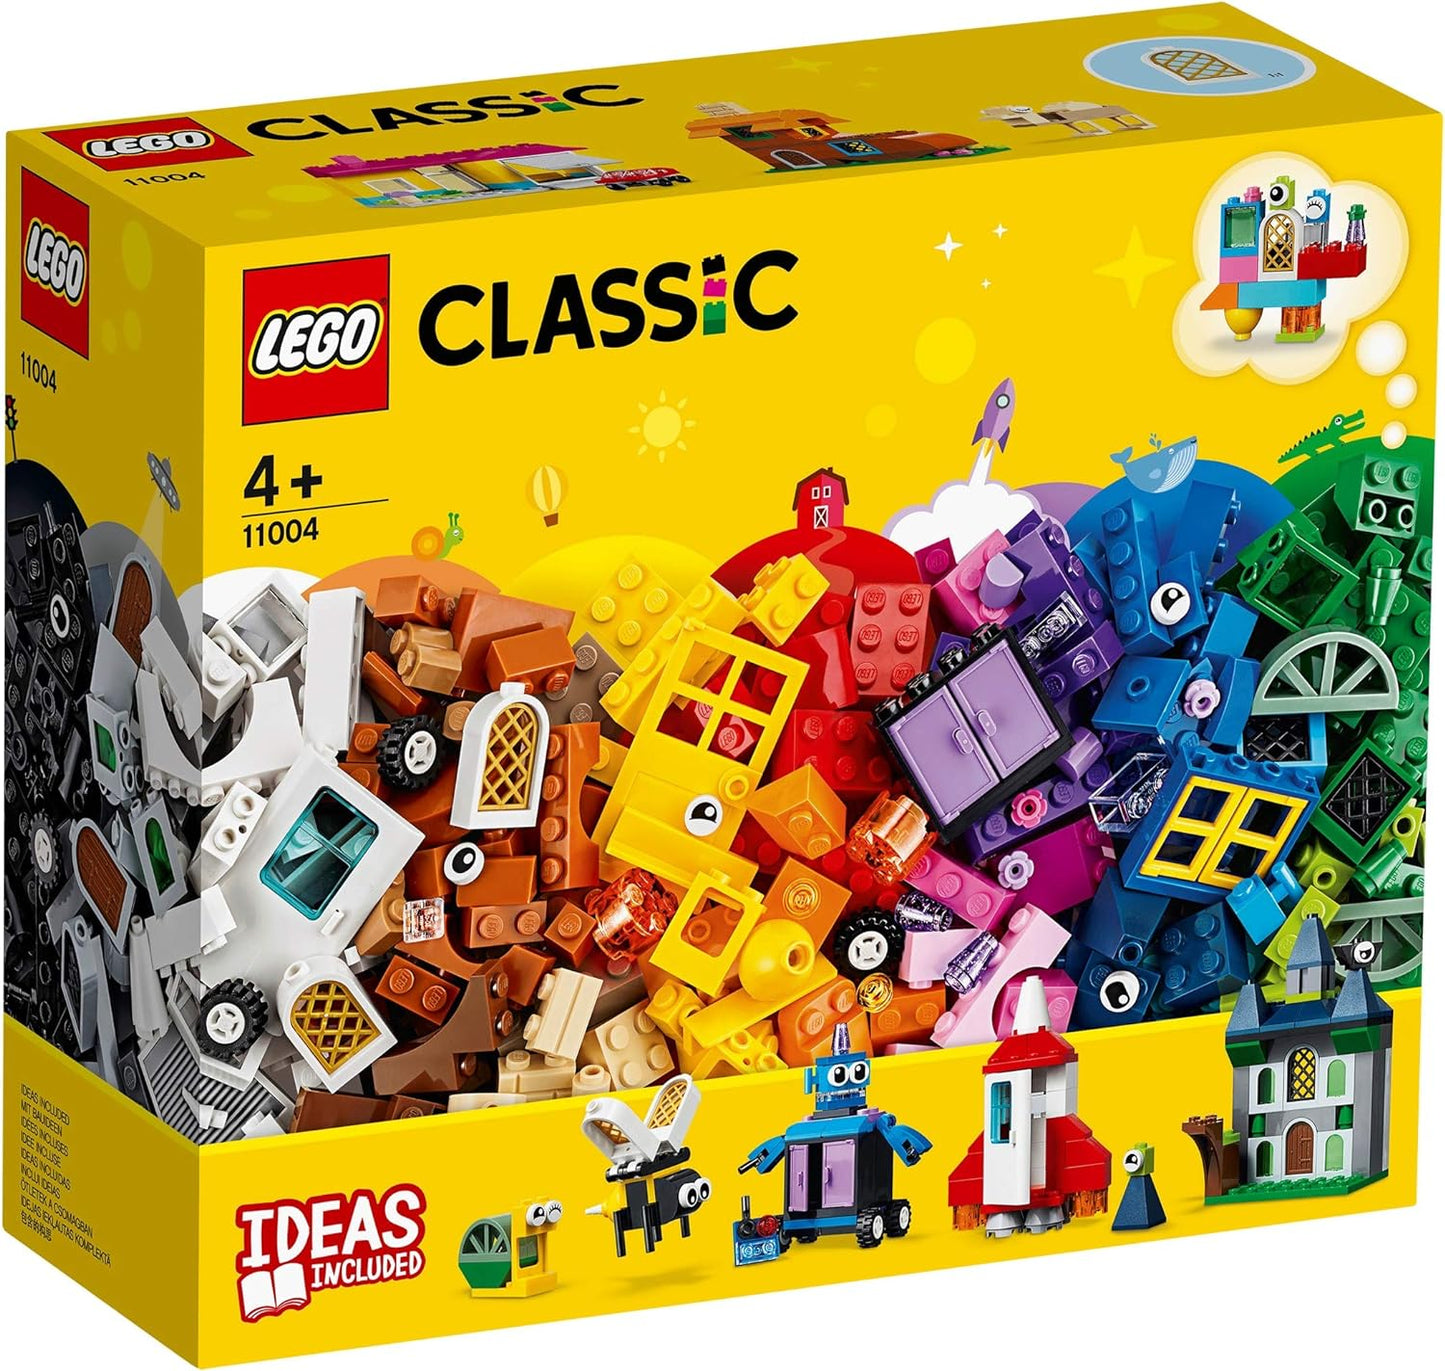 11004 LEGO Classic Windows of Creativity ***2019*** (JUNE)